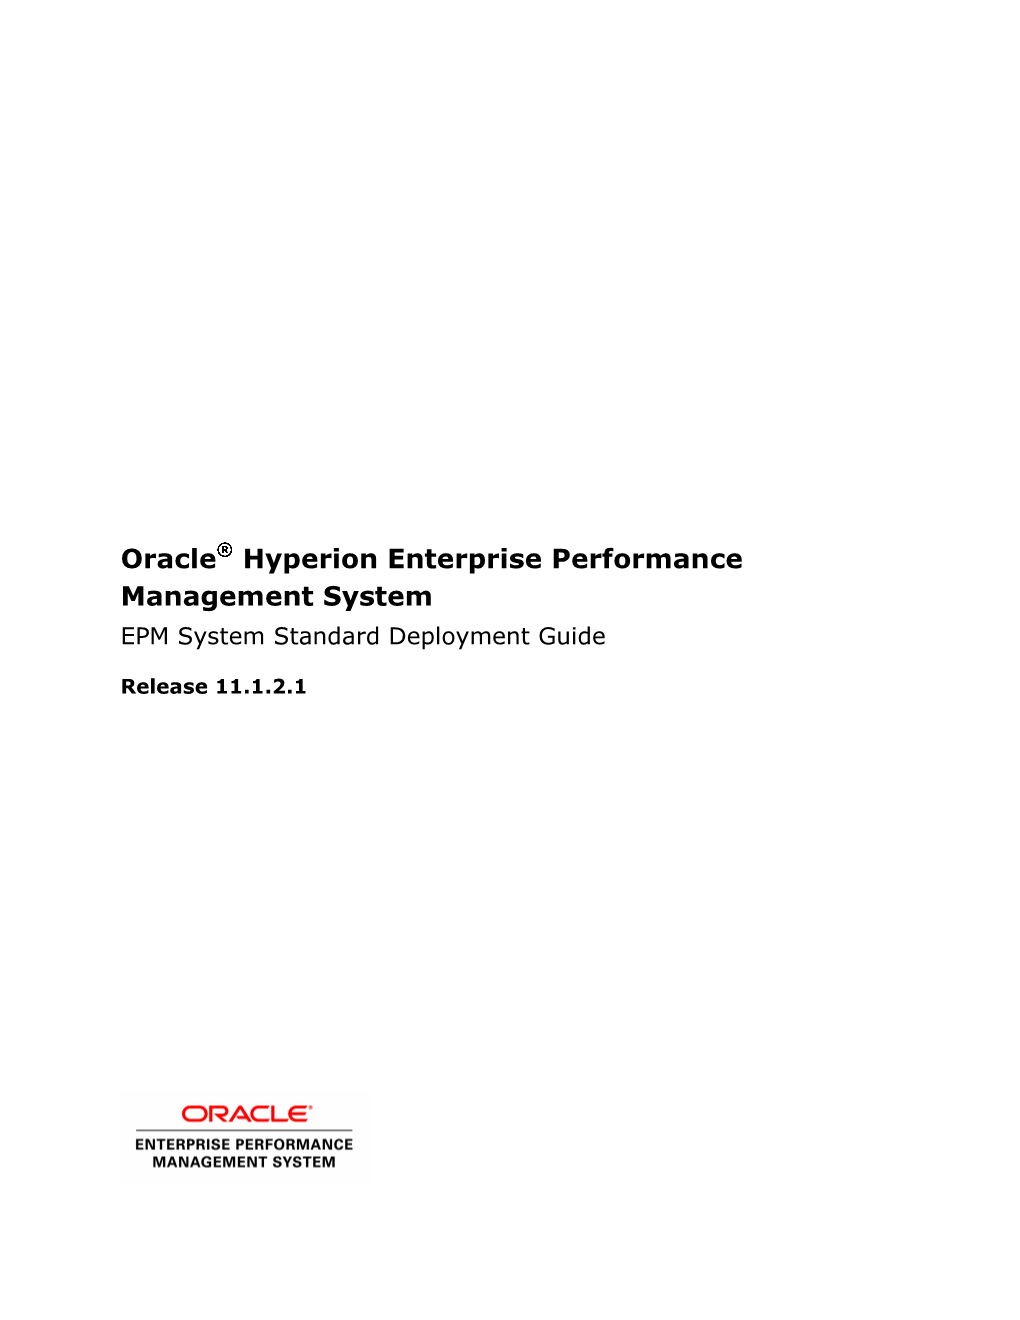 Oracle Hyperion Enterprise Performance Management System EPM System Standard Deployment Guide